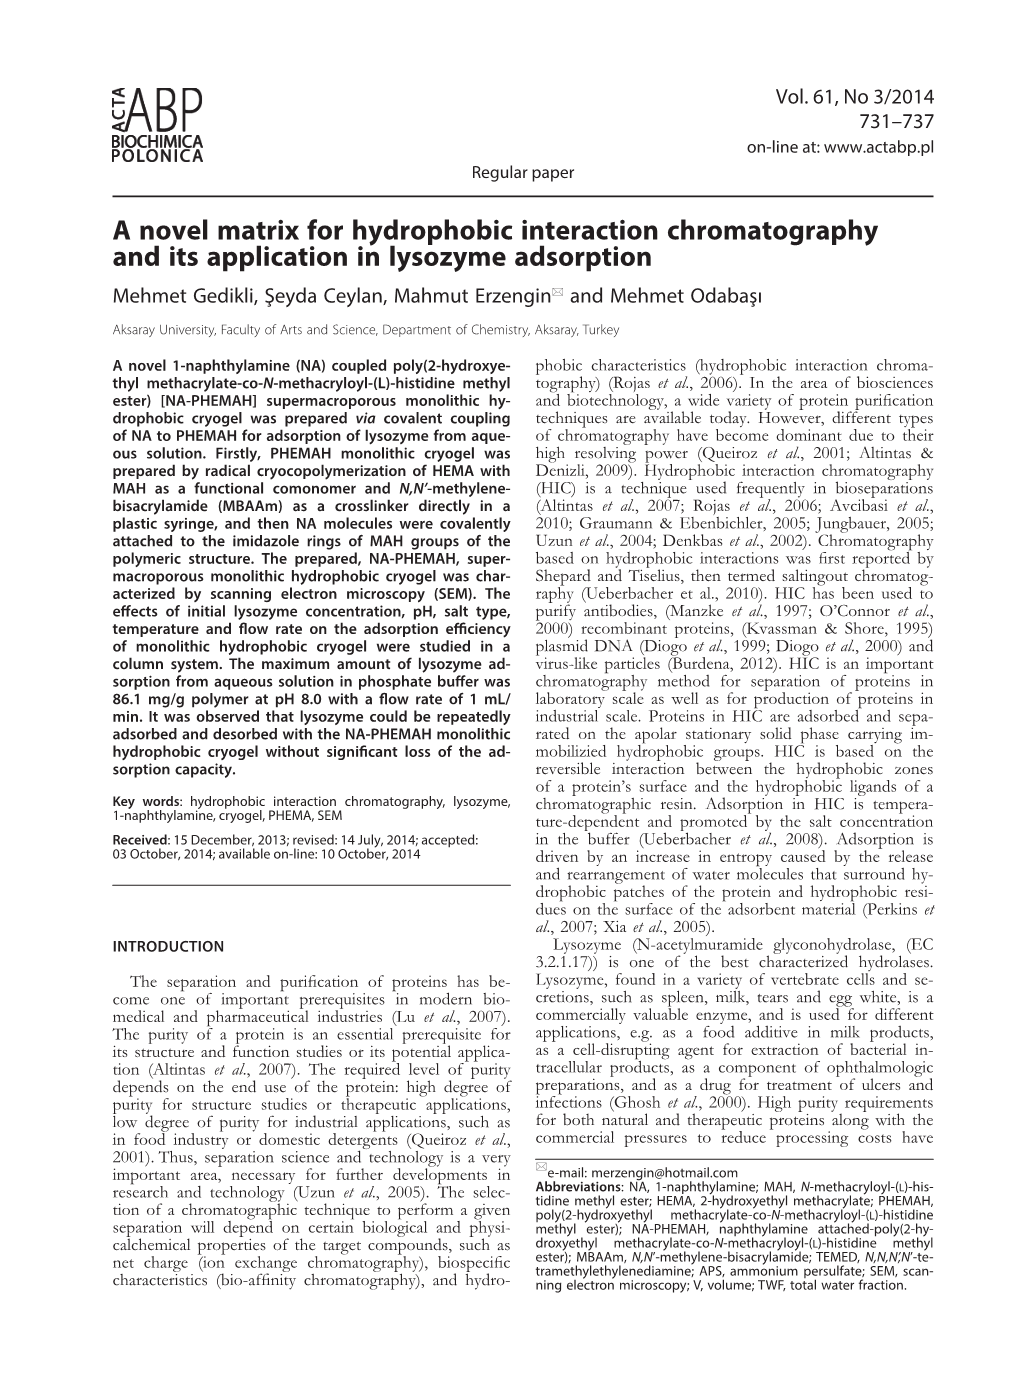 A Novel Matrix for Hydrophobic Interaction Chromatography and Its Application in Lysozyme Adsorption Mehmet Gedikli, Şeyda Ceylan, Mahmut Erzengin* and Mehmet Odabaşı